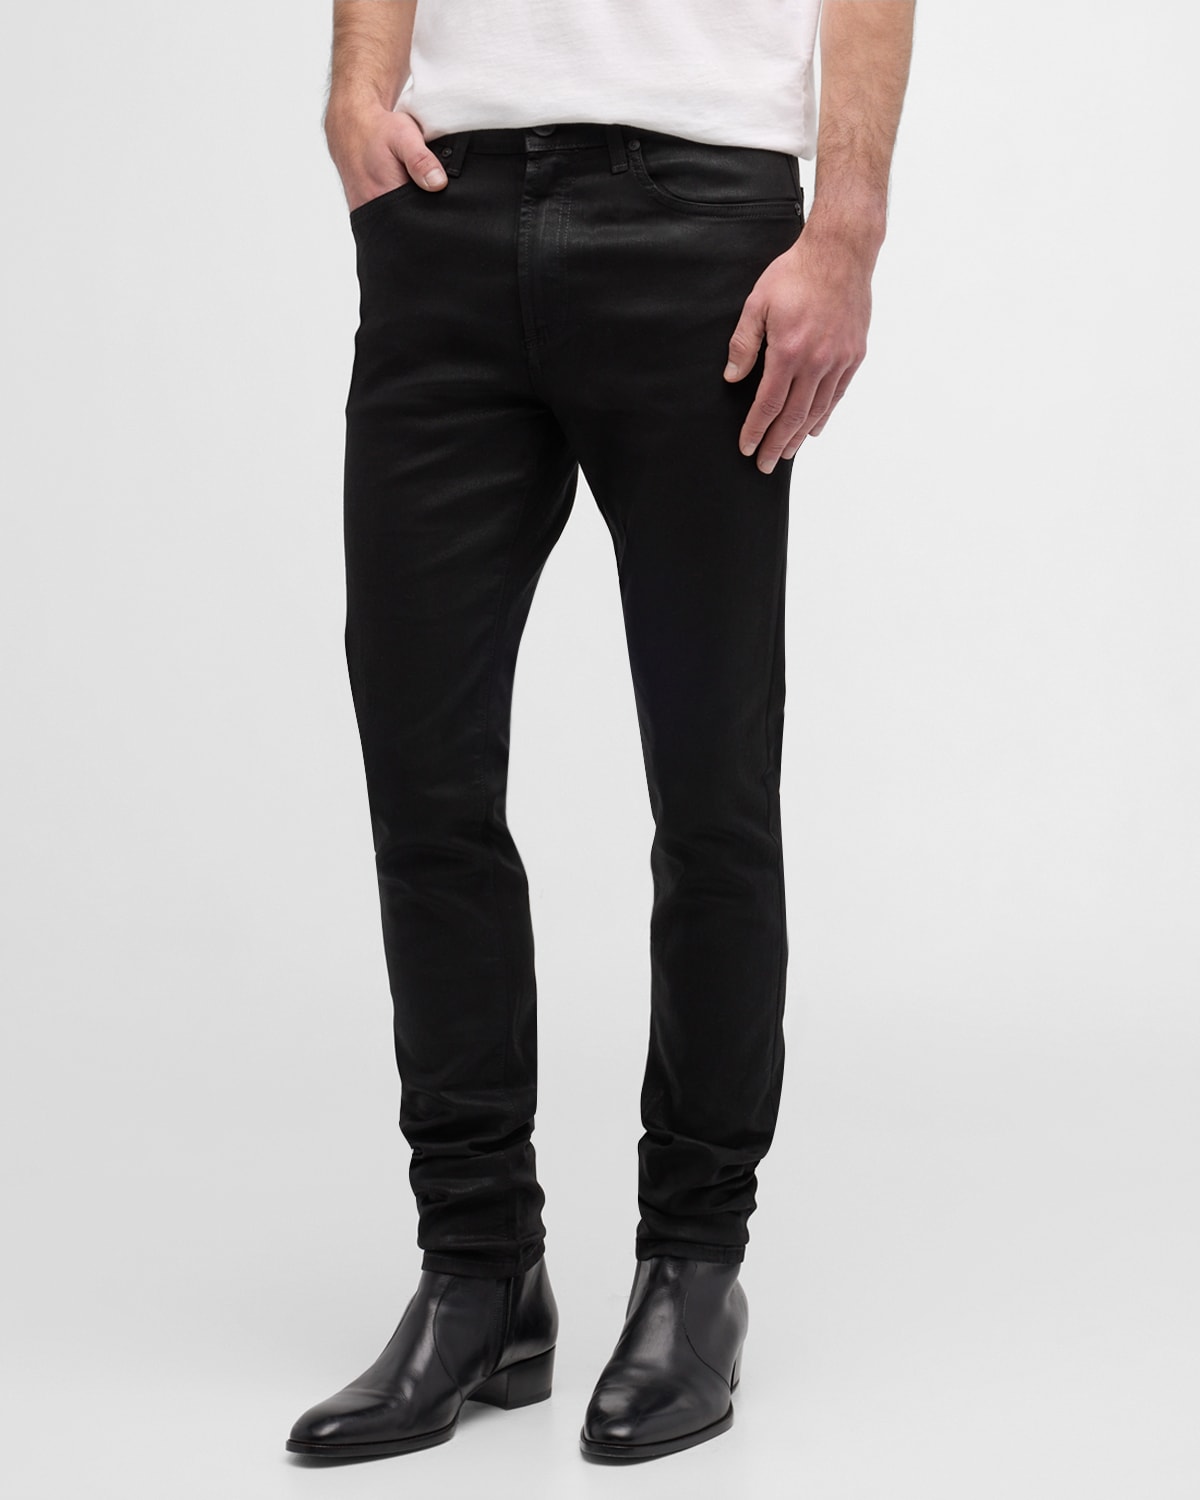 monfrere Men's Greyson Skinny Jeans | Neiman Marcus